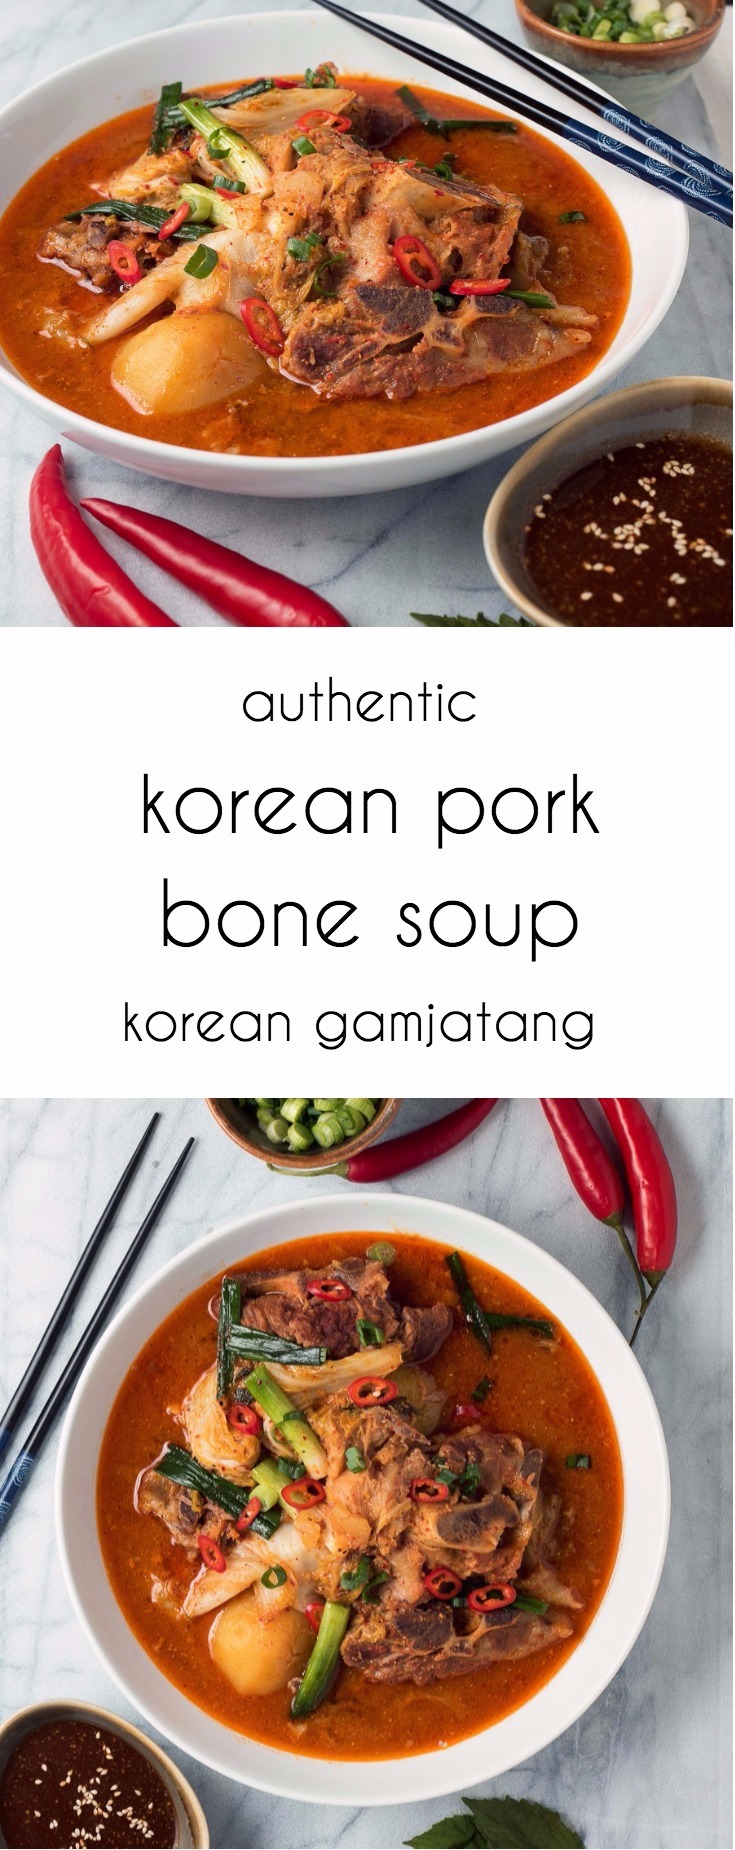 Korean pork neck bone soup - gamjatang. This is real foodie cooking!